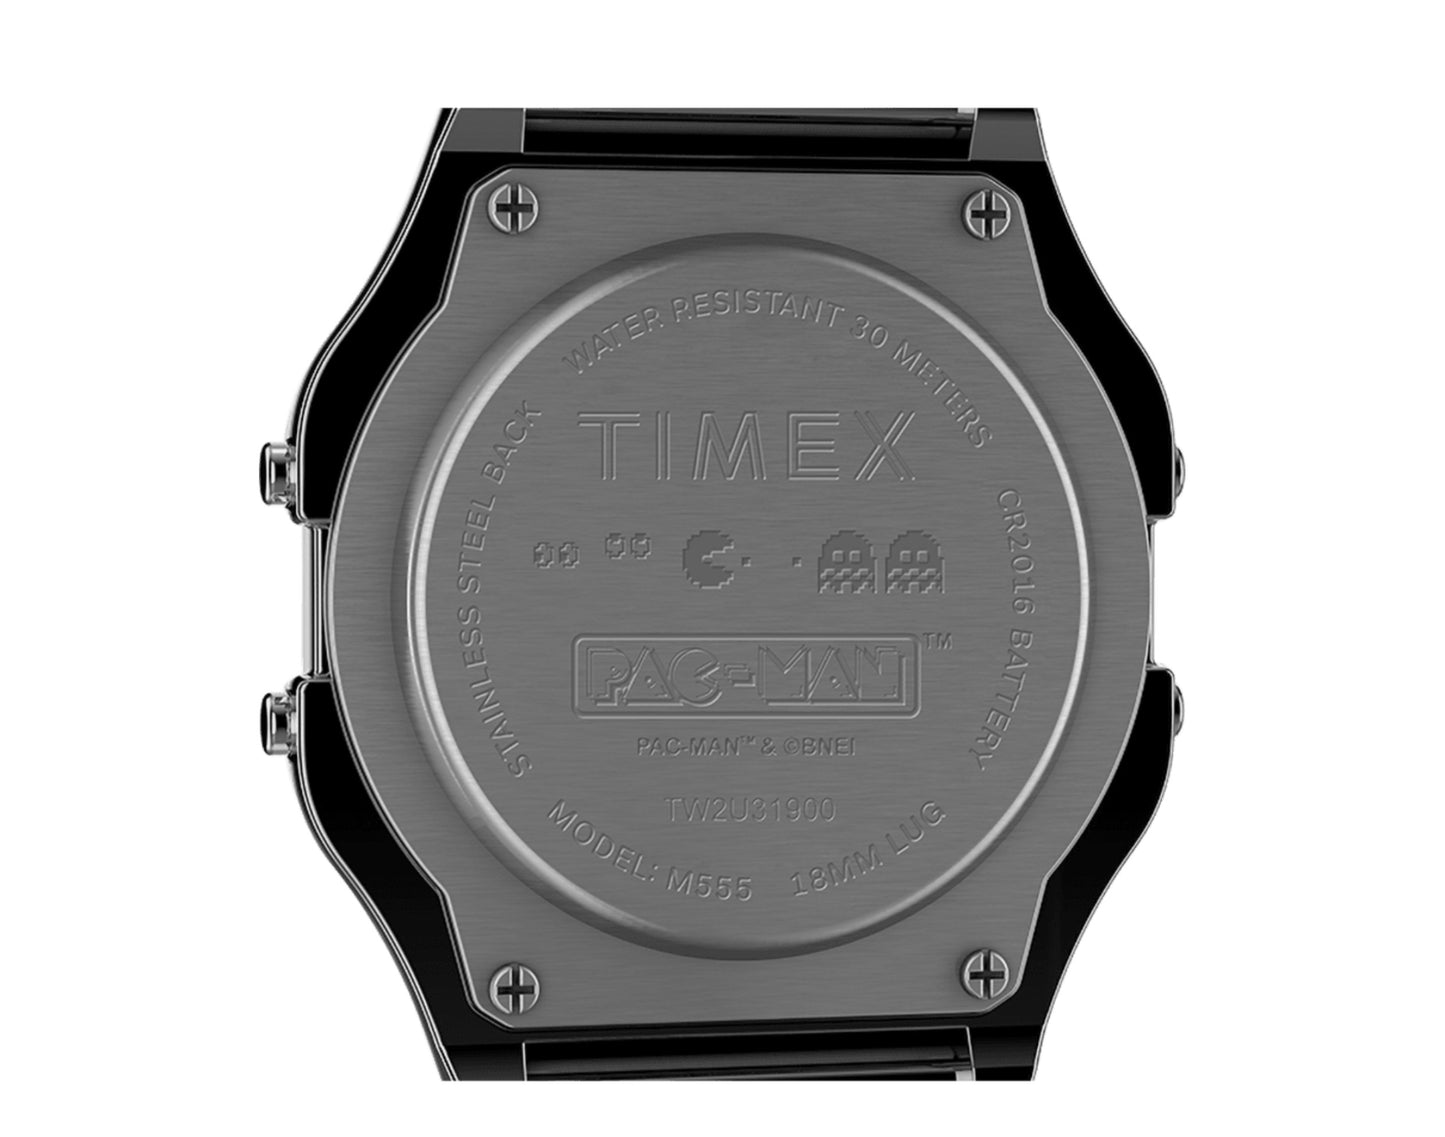 Timex T80 x PAC-MAN 34mm Stainless Steel Bracelet Watch